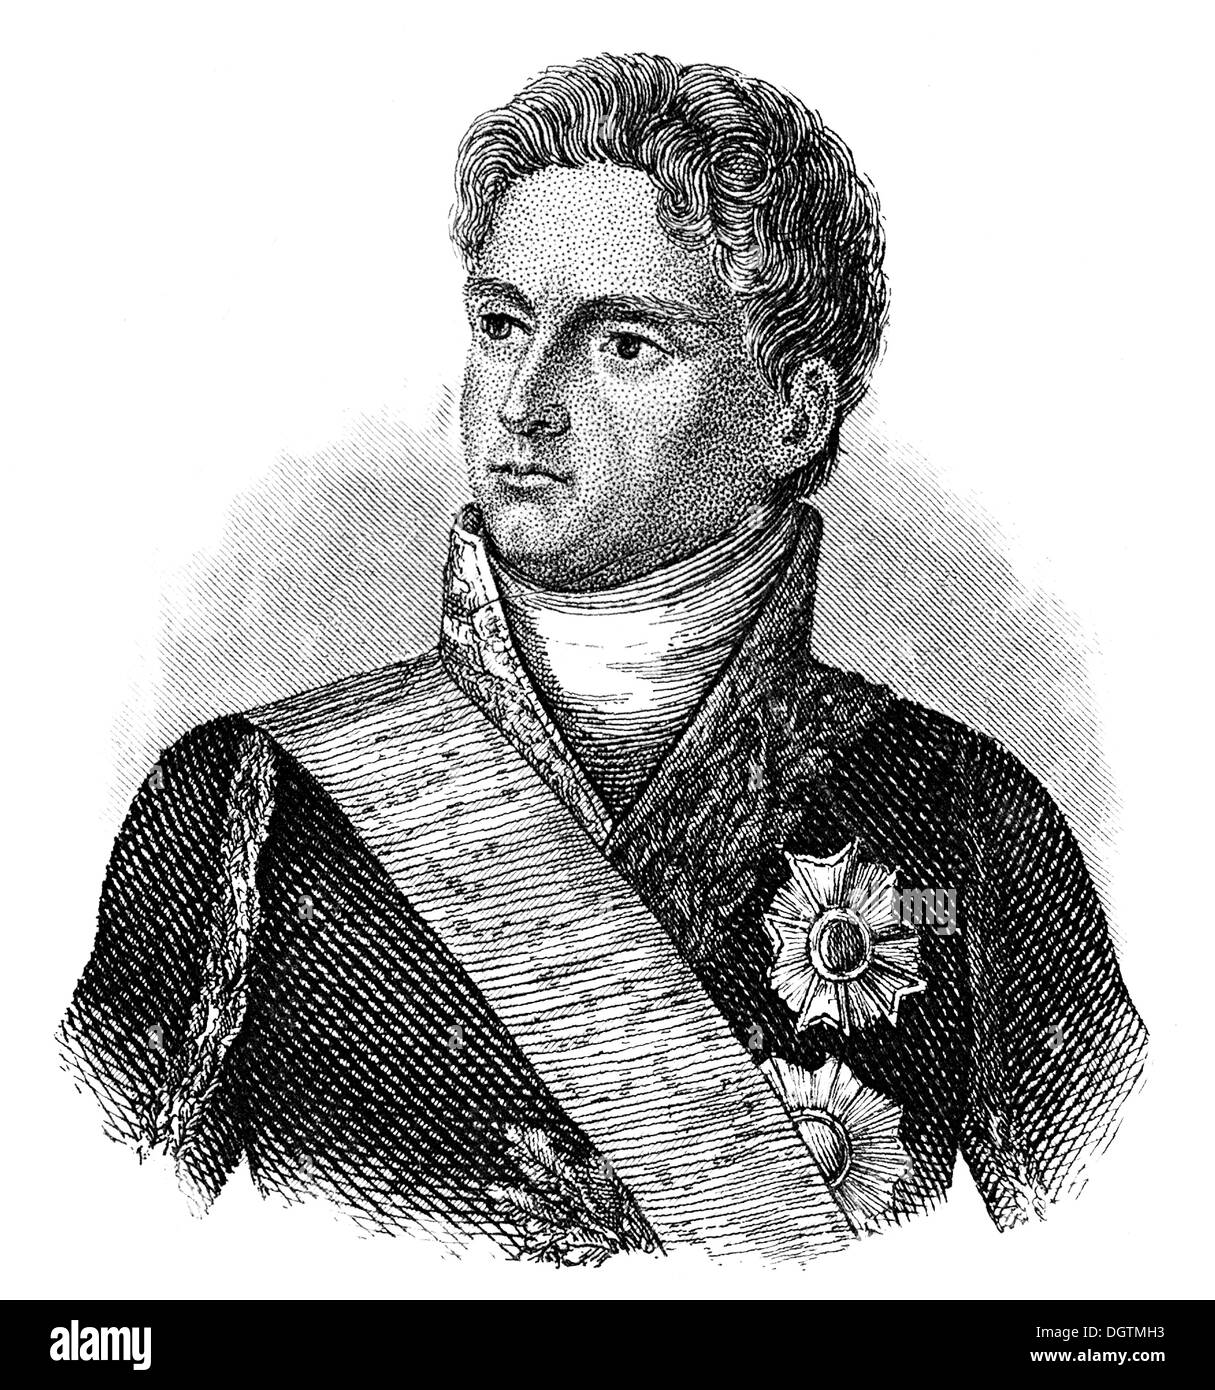 Alexandre Berthier, primer príncipe de Wagram, 1st Duc de Valangin, primer Príncipe Soberano de Neuchâtel, 1753 - 1815, Mariscal de Francia Foto de stock